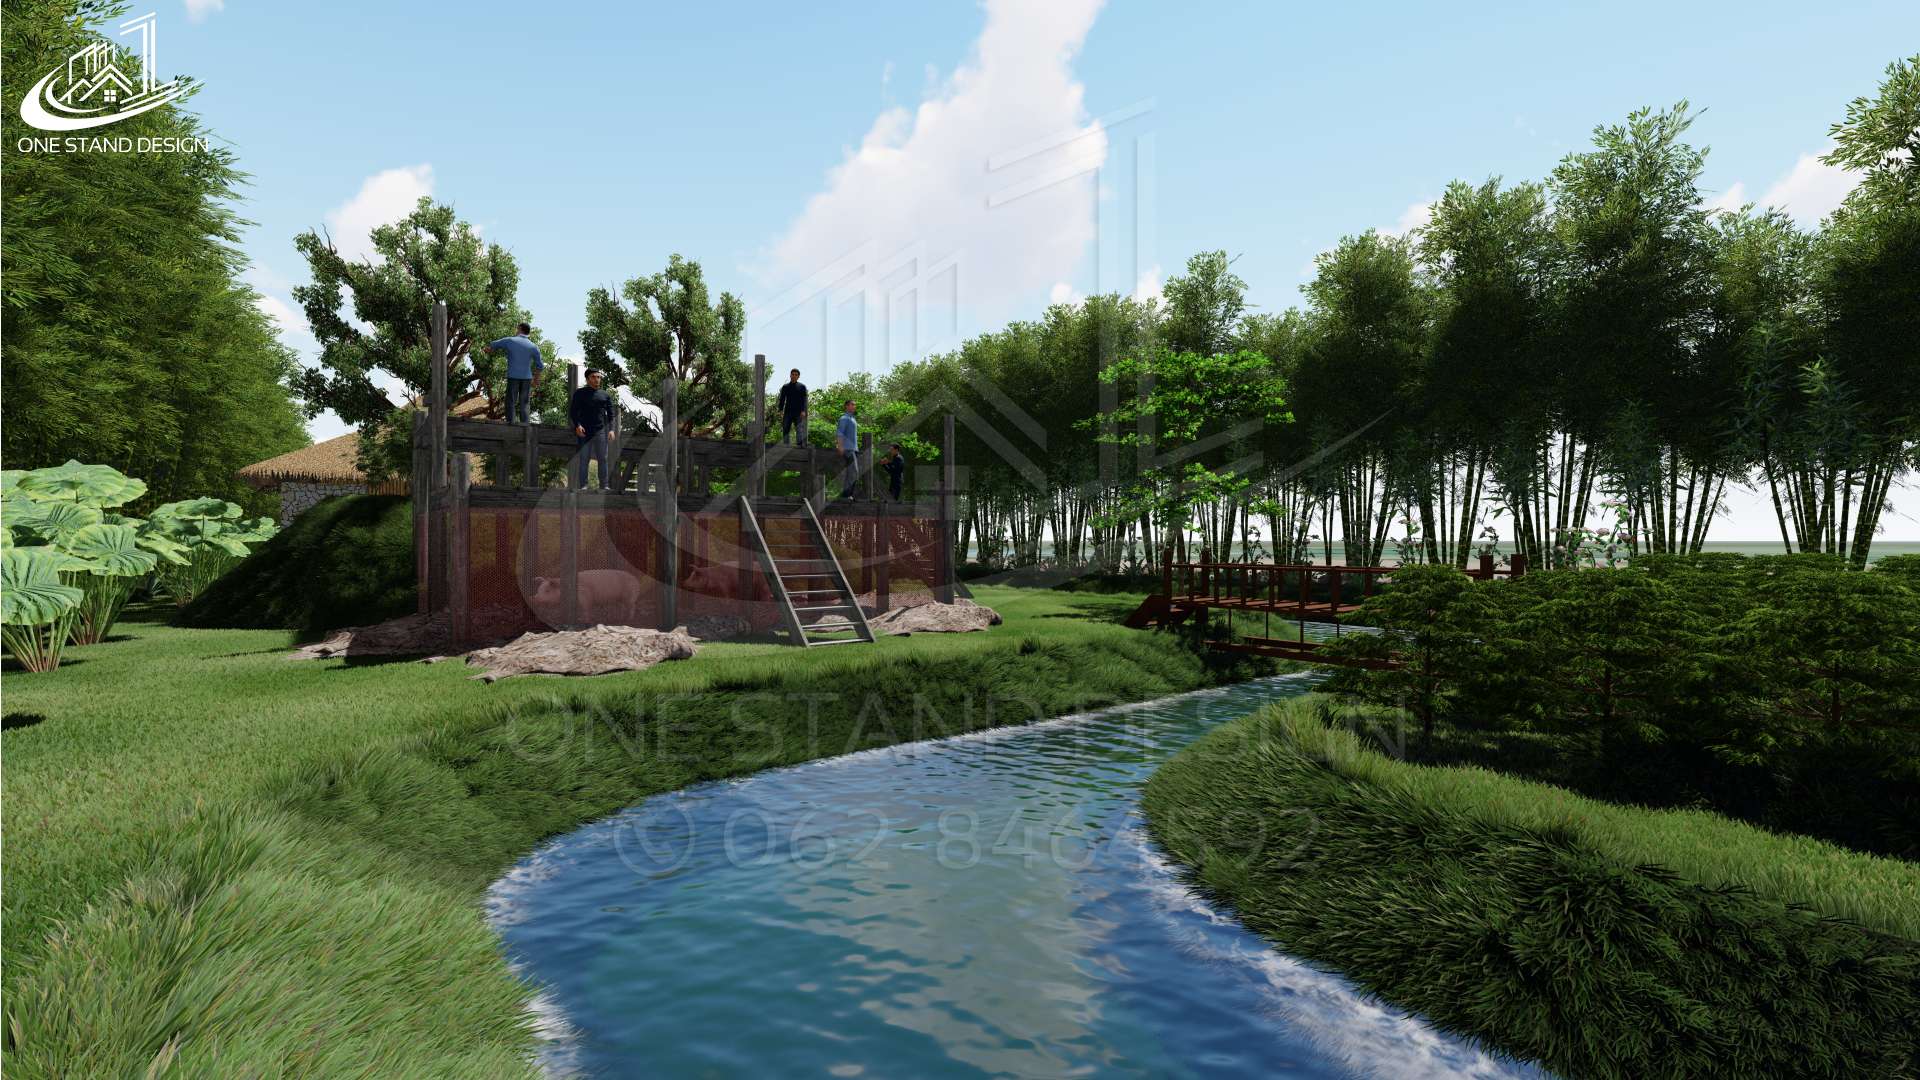 One Stand Design Company, รับออกแบบ 3D Floor plan, รับออกแบบ 3D Perspective, Landscape Design